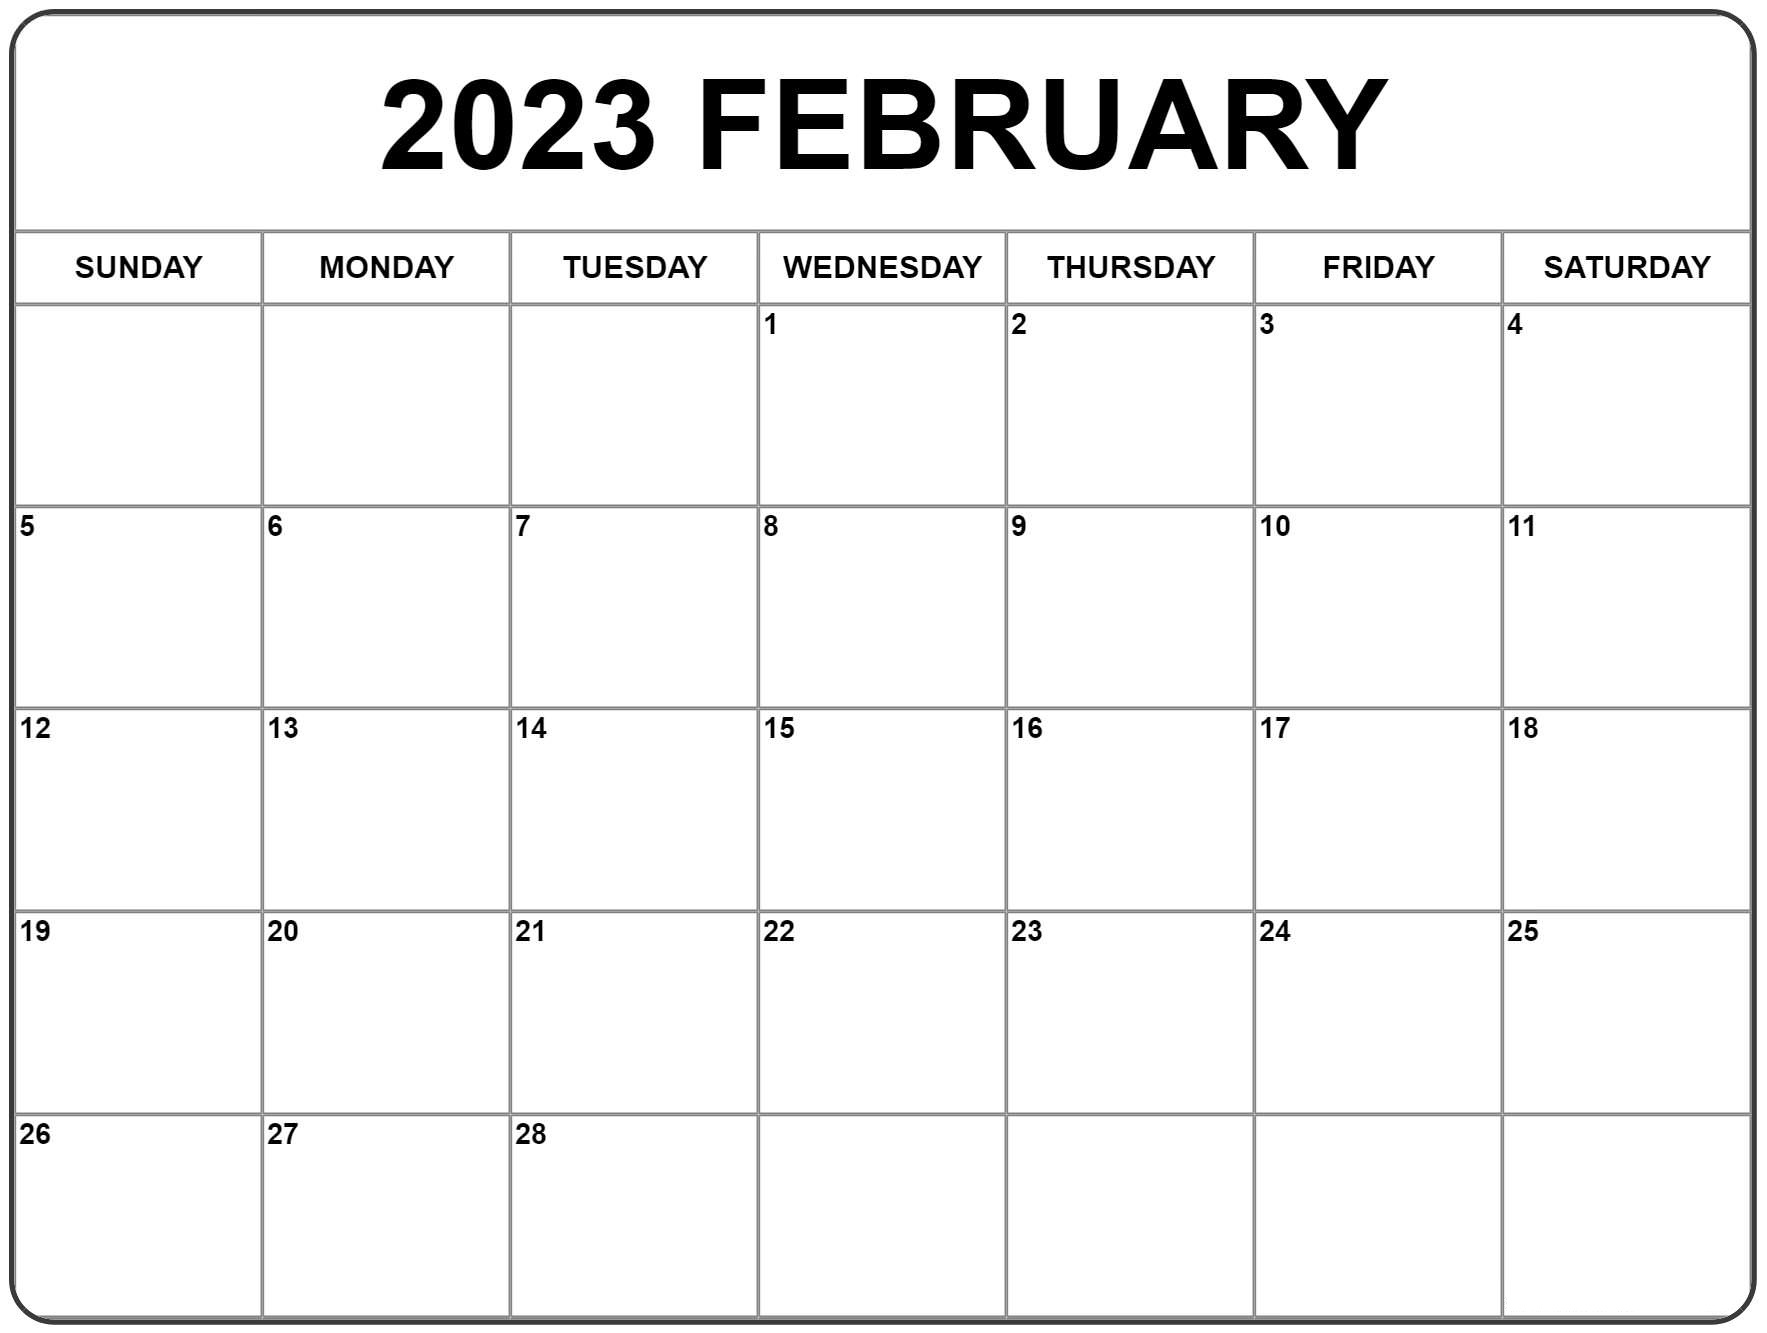 February-2023-calendar-b18.jpg printable calendar